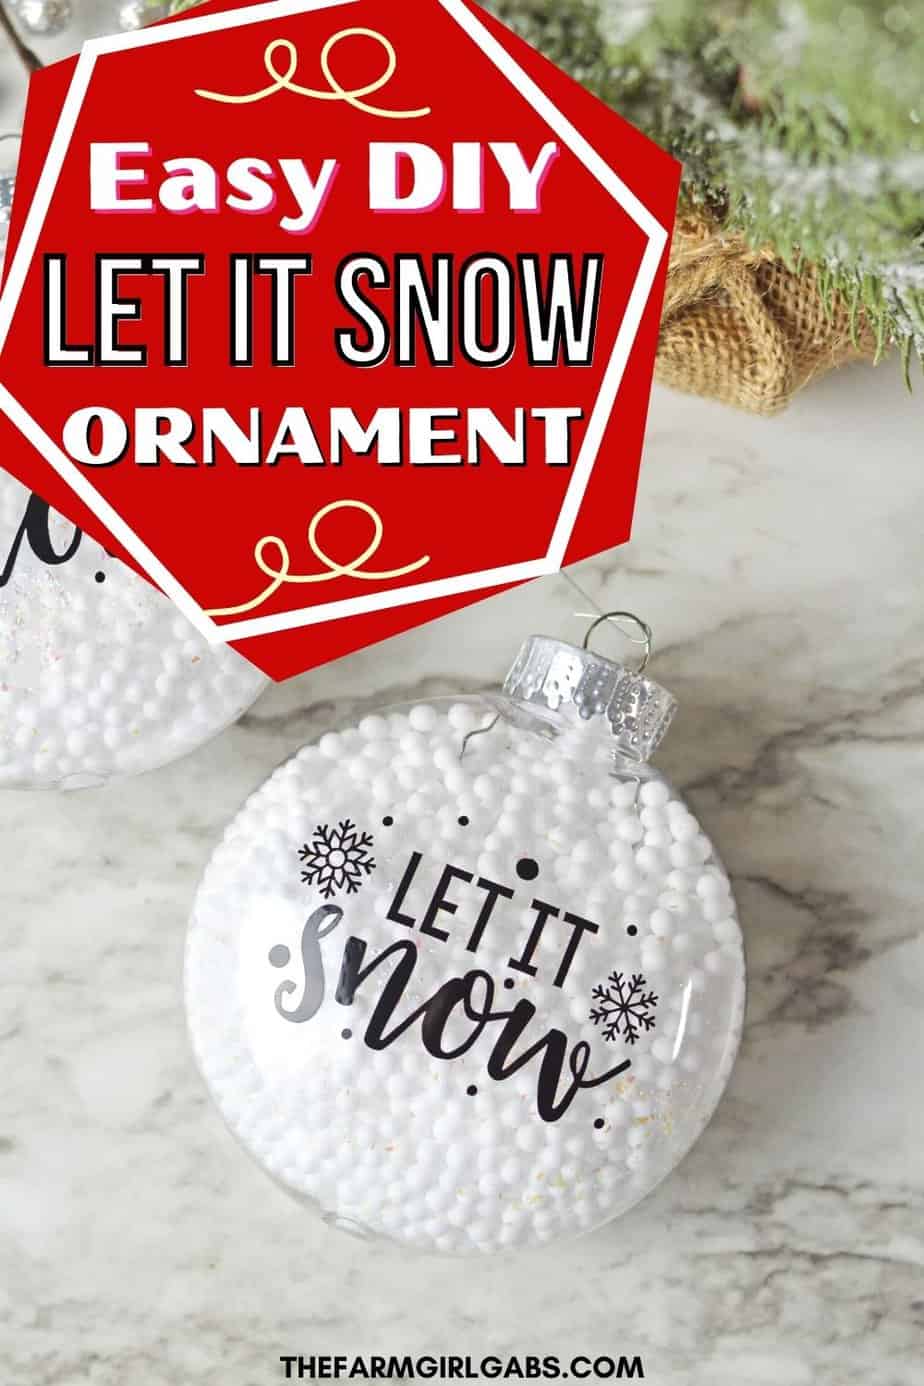 Let it Snow Ornament - The Farm Girl Gabs®